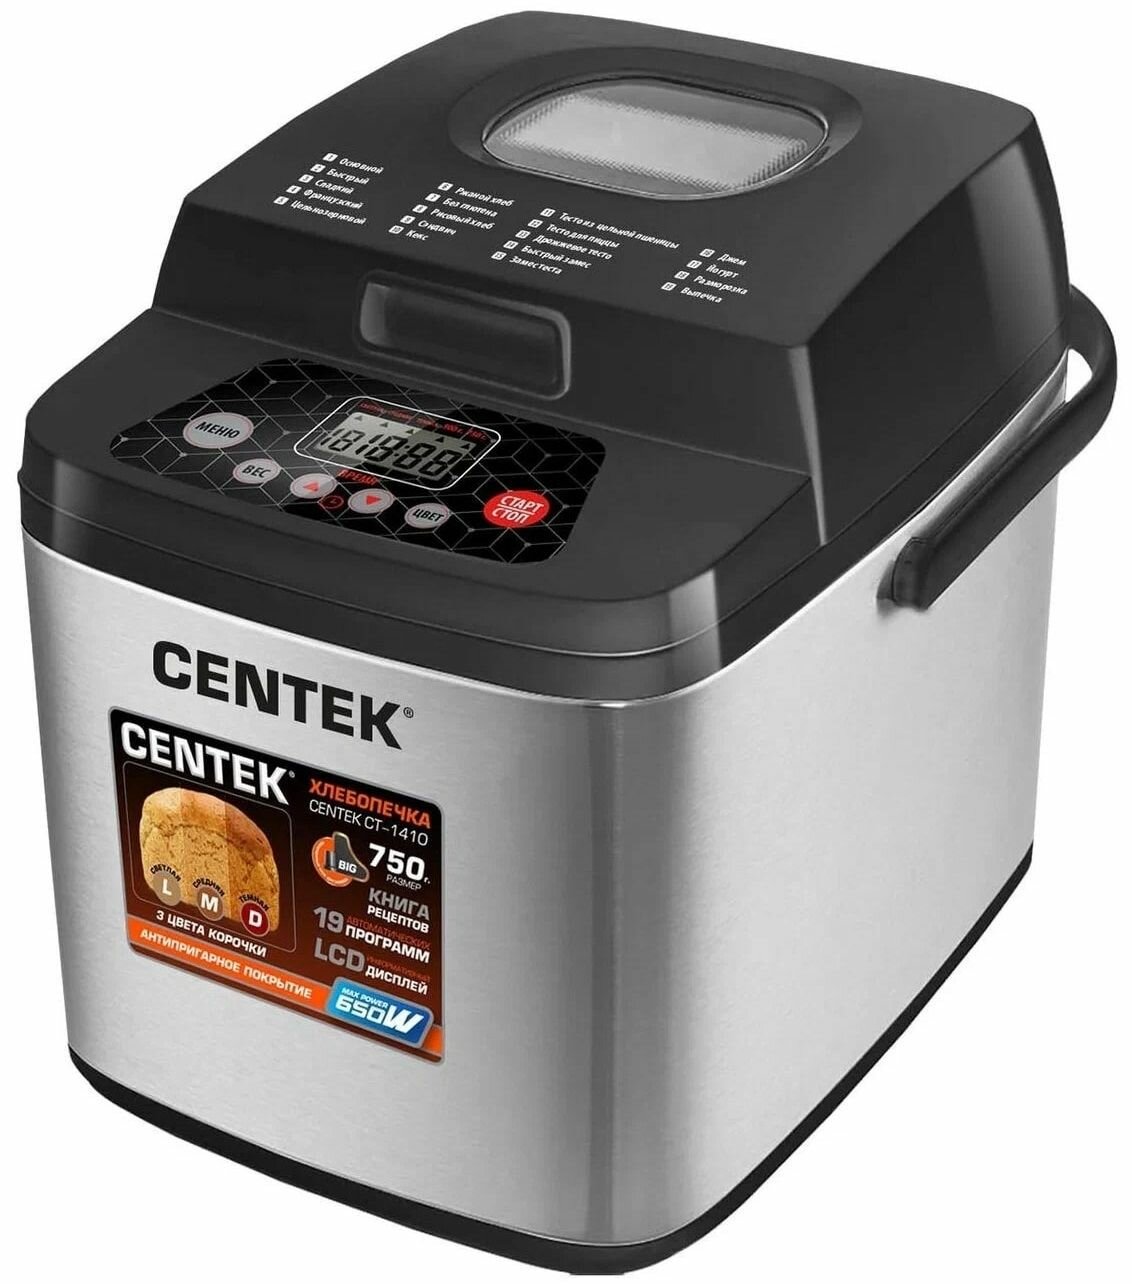 Хлебопечь CENTEK CT-1410 черная б/у (-75%) №2516 750г,650Вт,19программ(йогурт, джем, кекс), LCD, нерж.